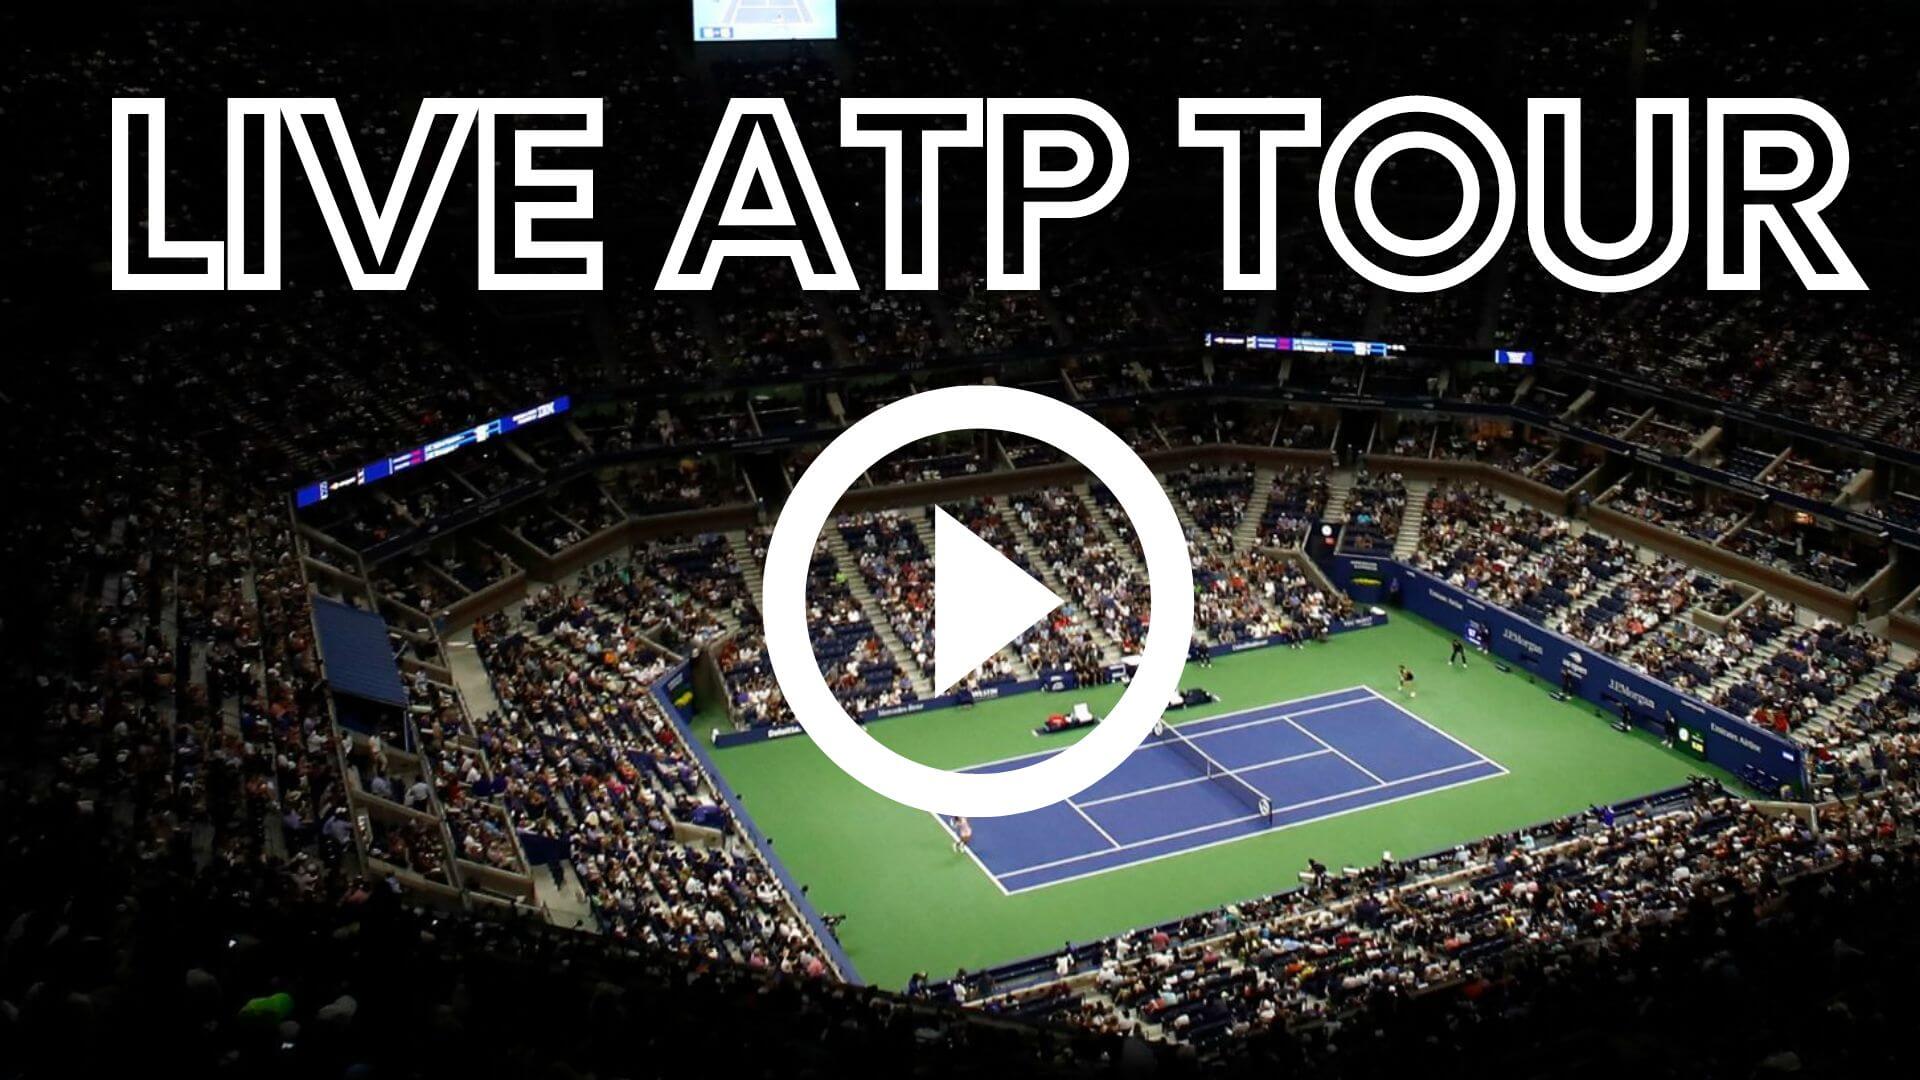 chile-open-live-stream-tennis-atp-tour-santiago